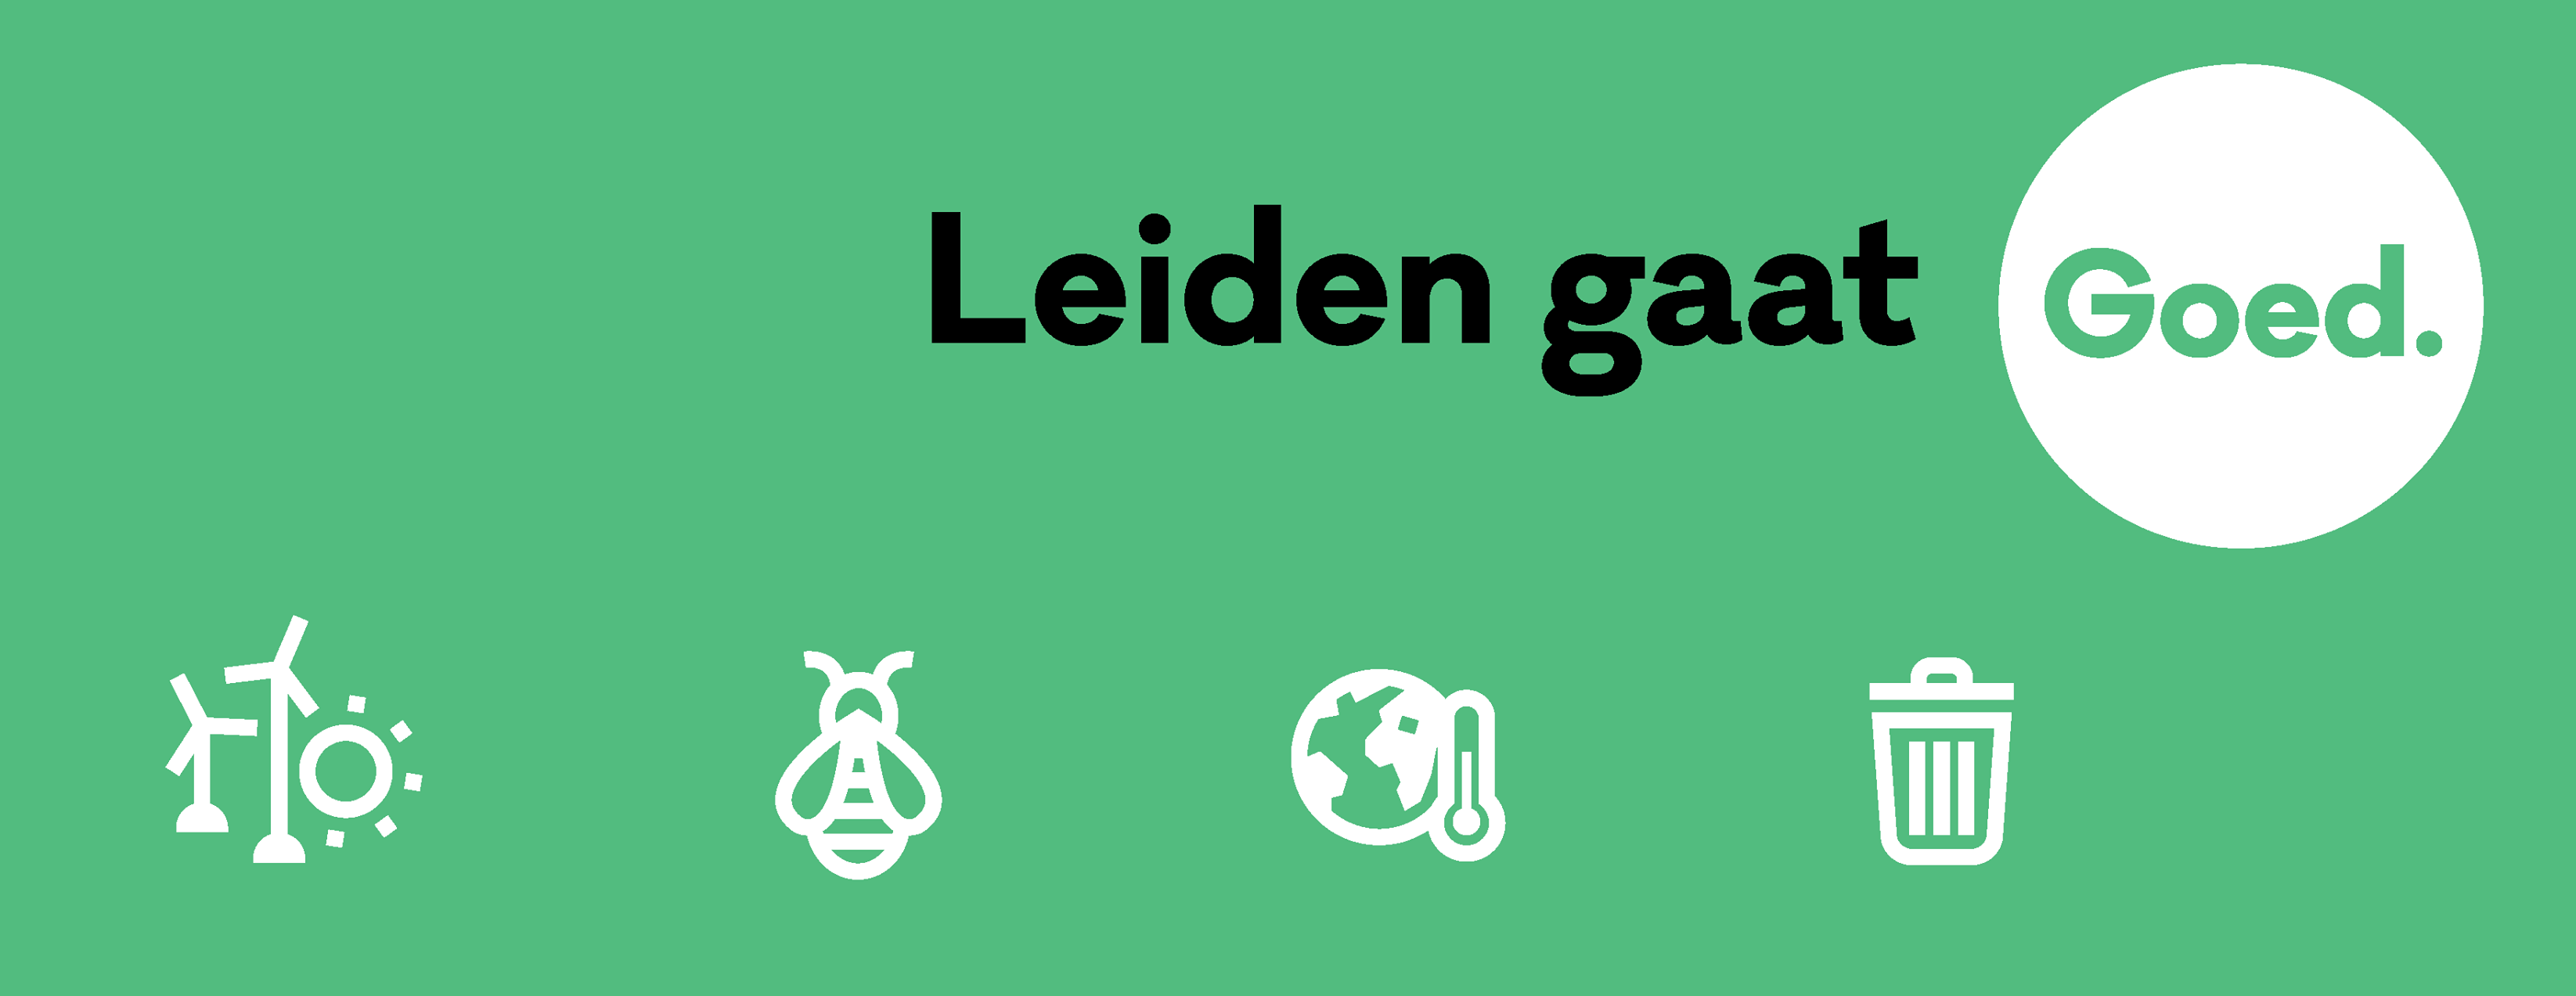 Duurzaamheidsagenda 2016-2020, Gemeente Leiden